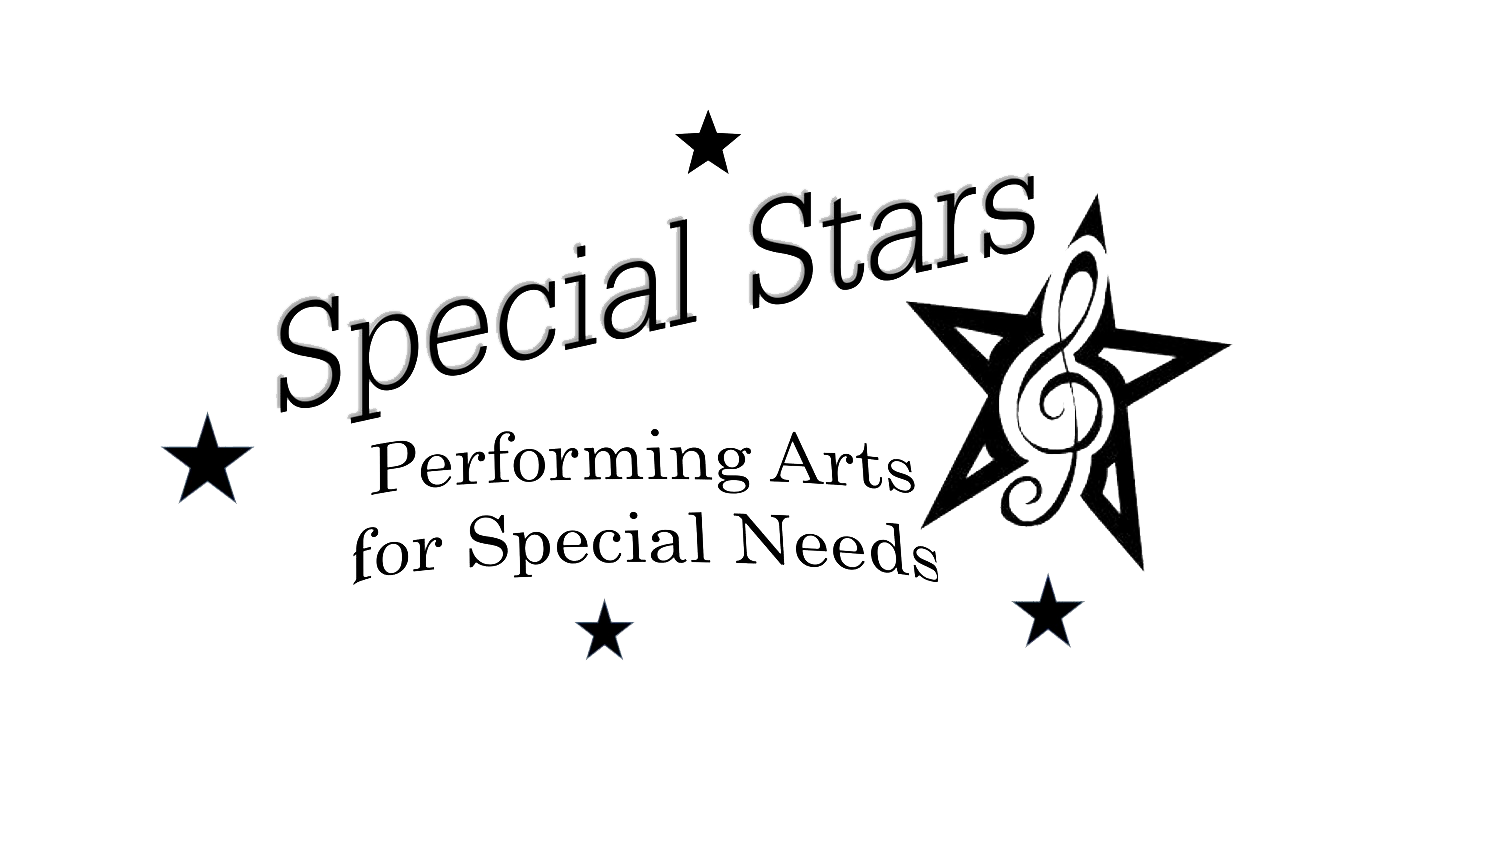 Special Stars Performing Arts Programs